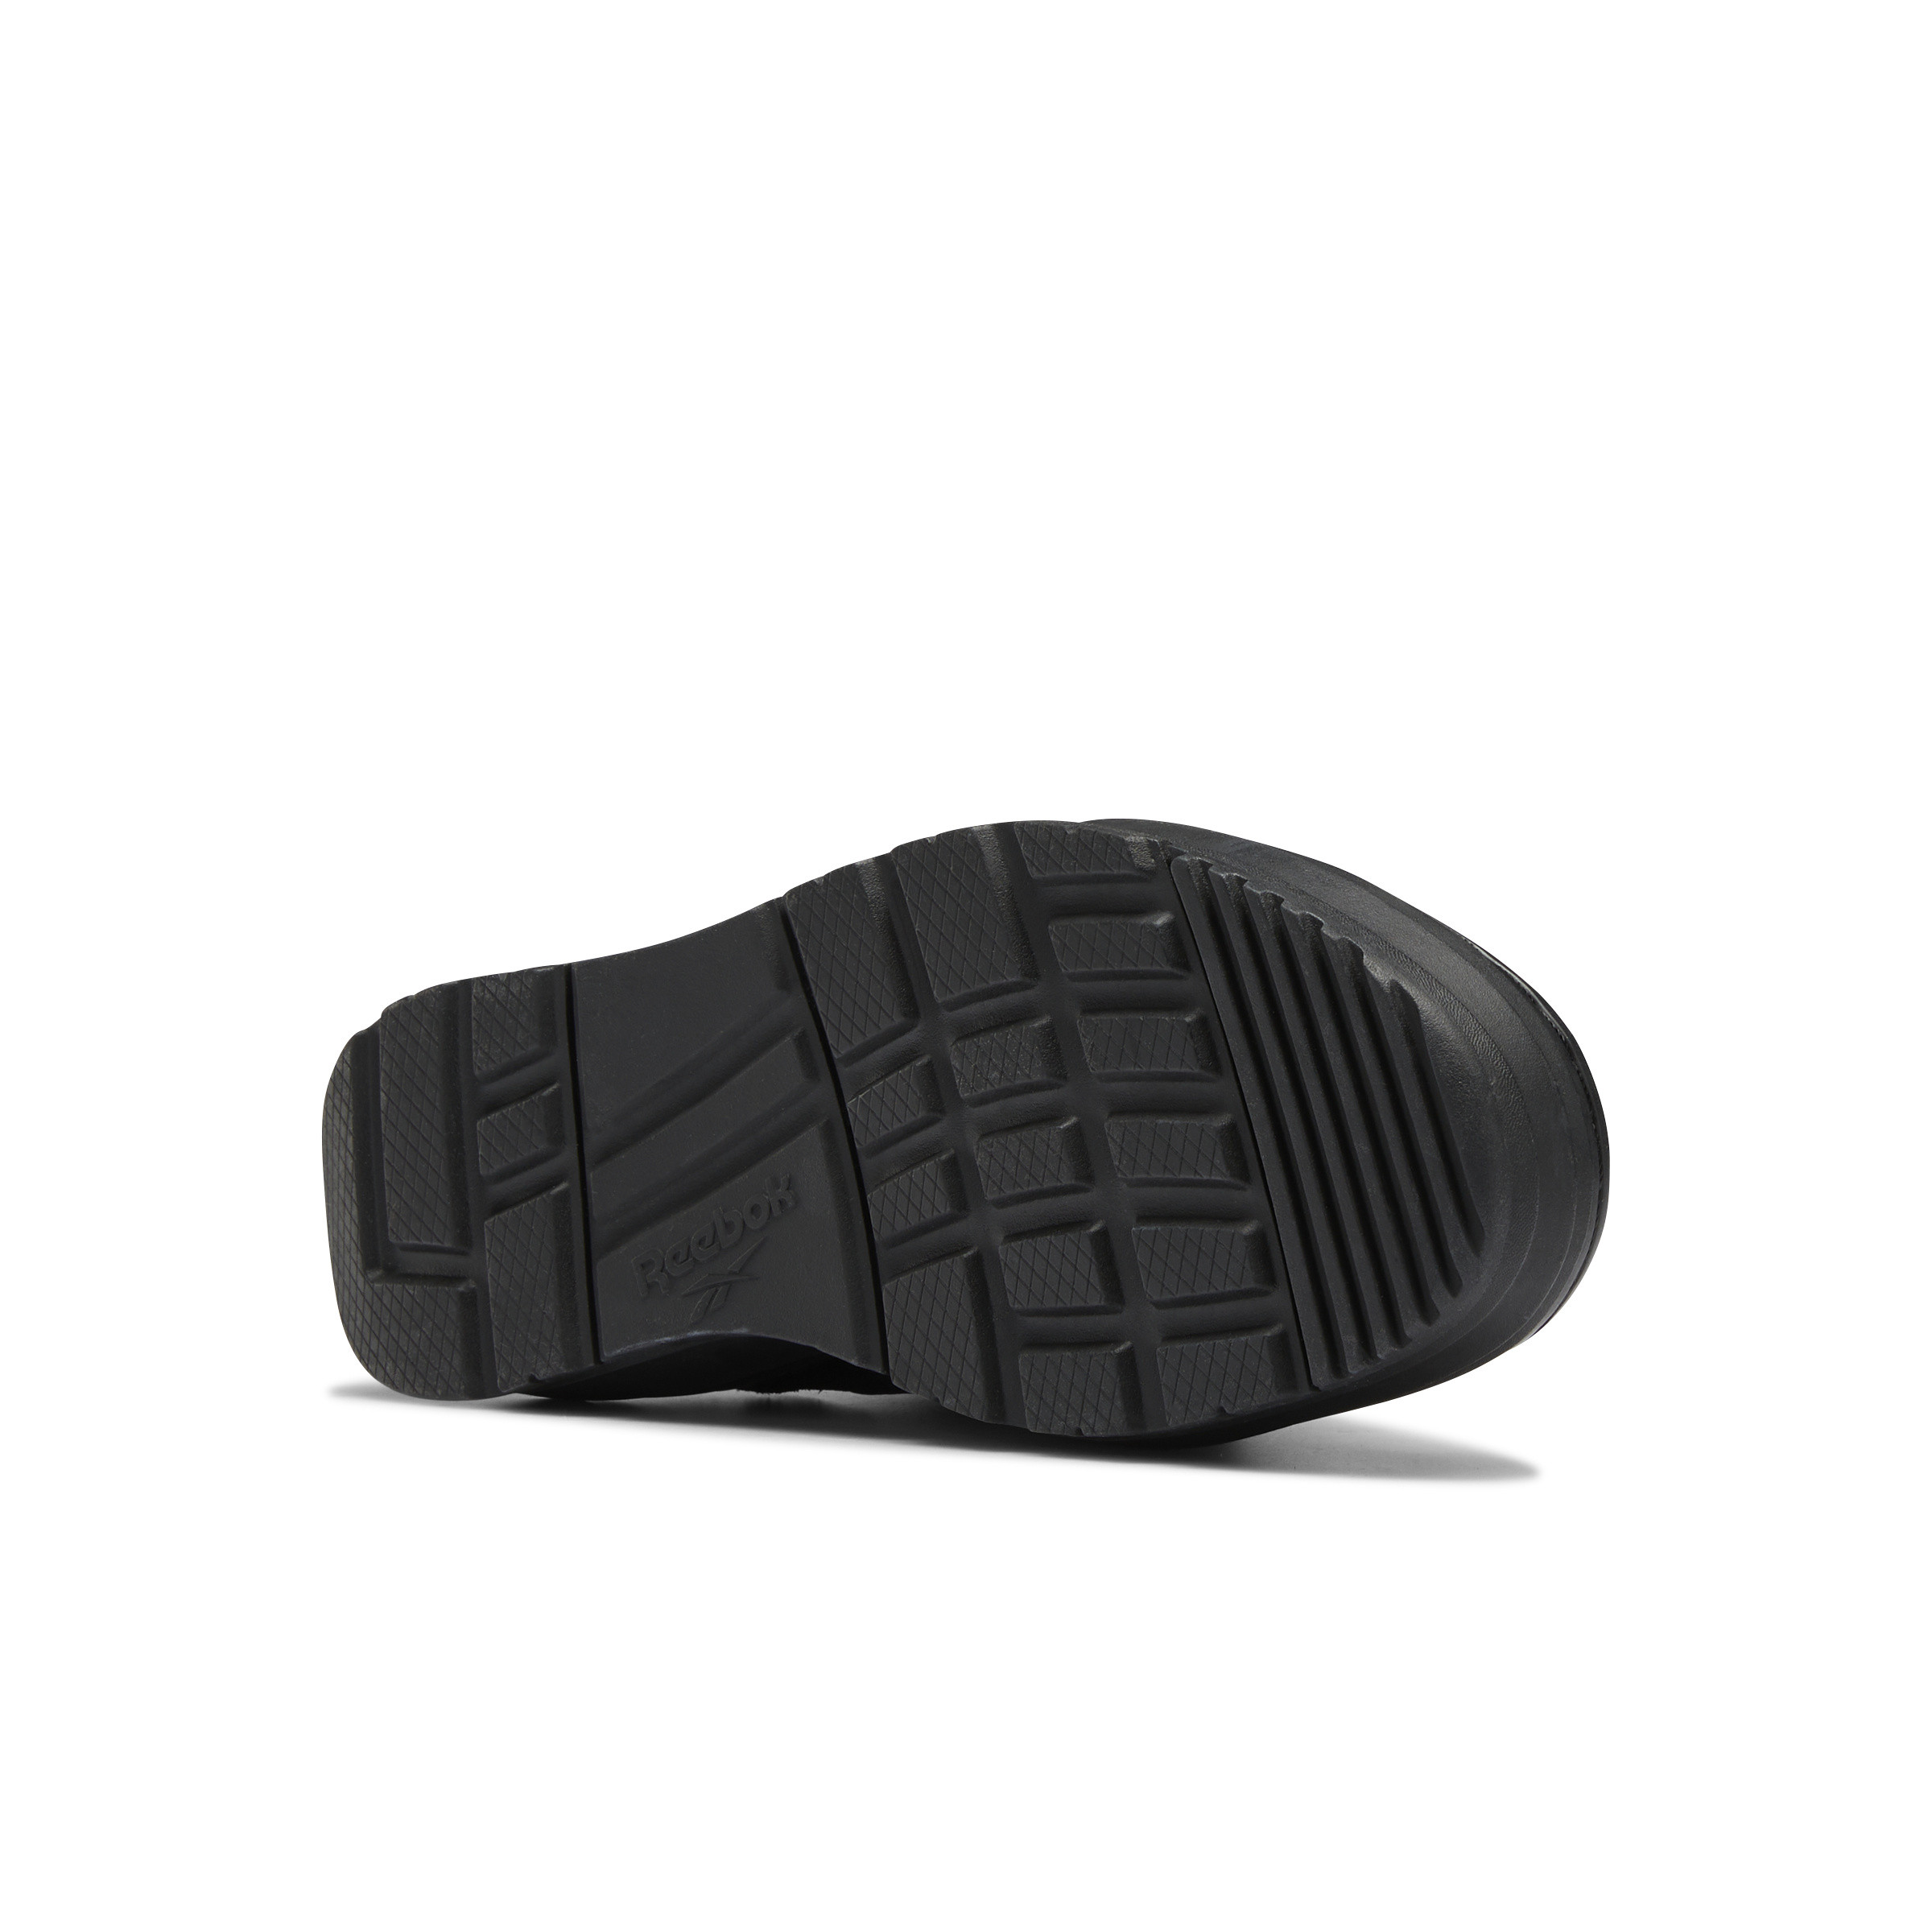 Reebok - Club C Geo Mid Shoes, Black, large image number 5